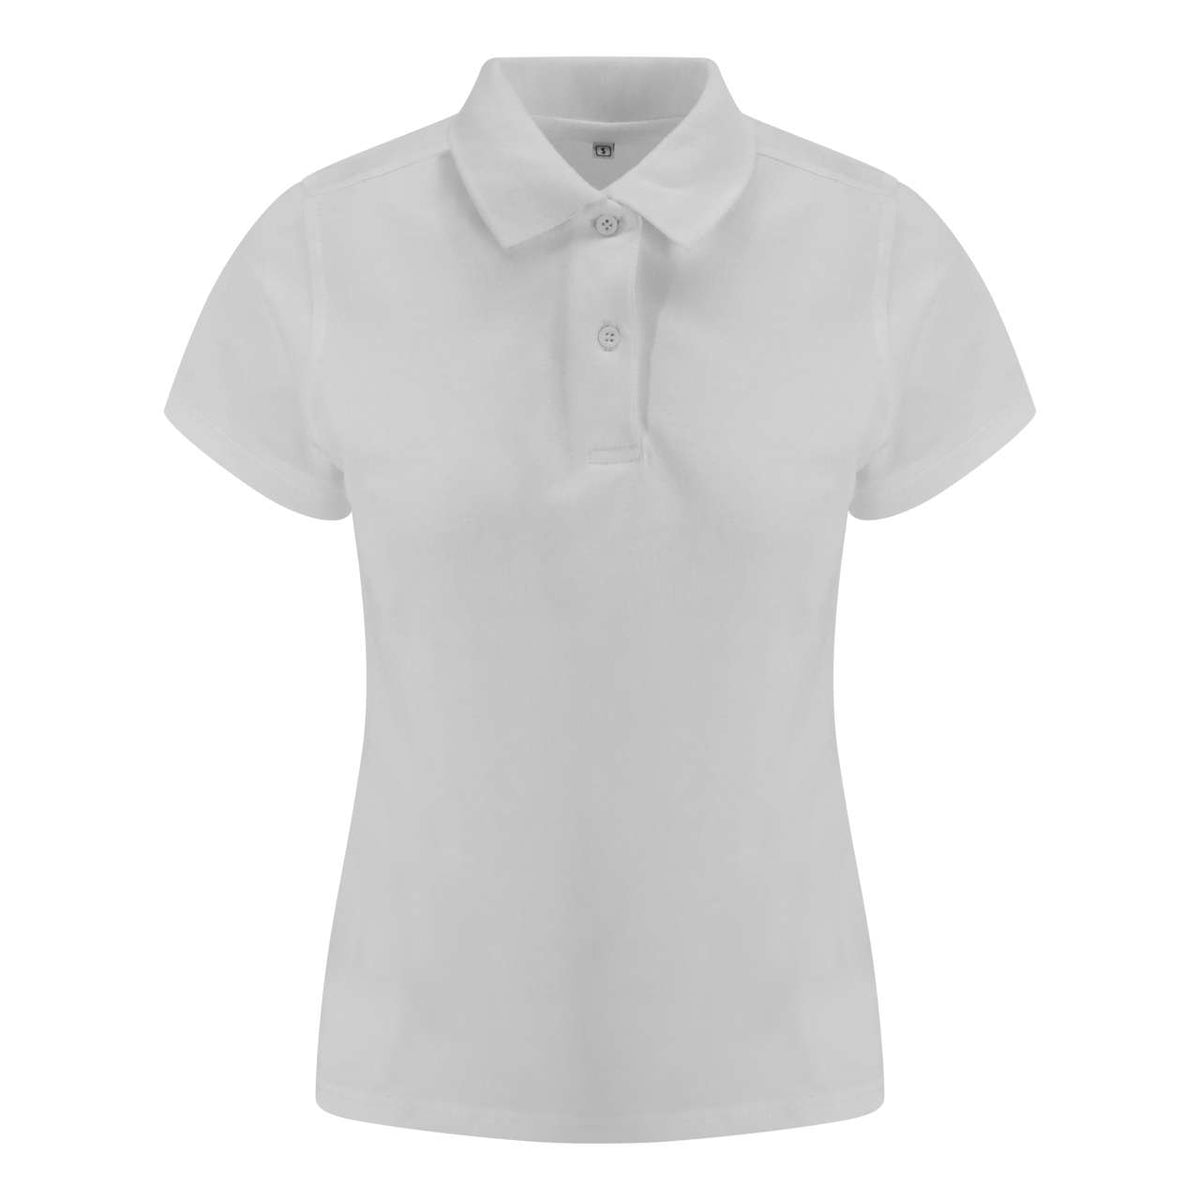 Just Polos Damen Polo Shirt T-Shirt Lady-Fit Poloshirt Polohemd